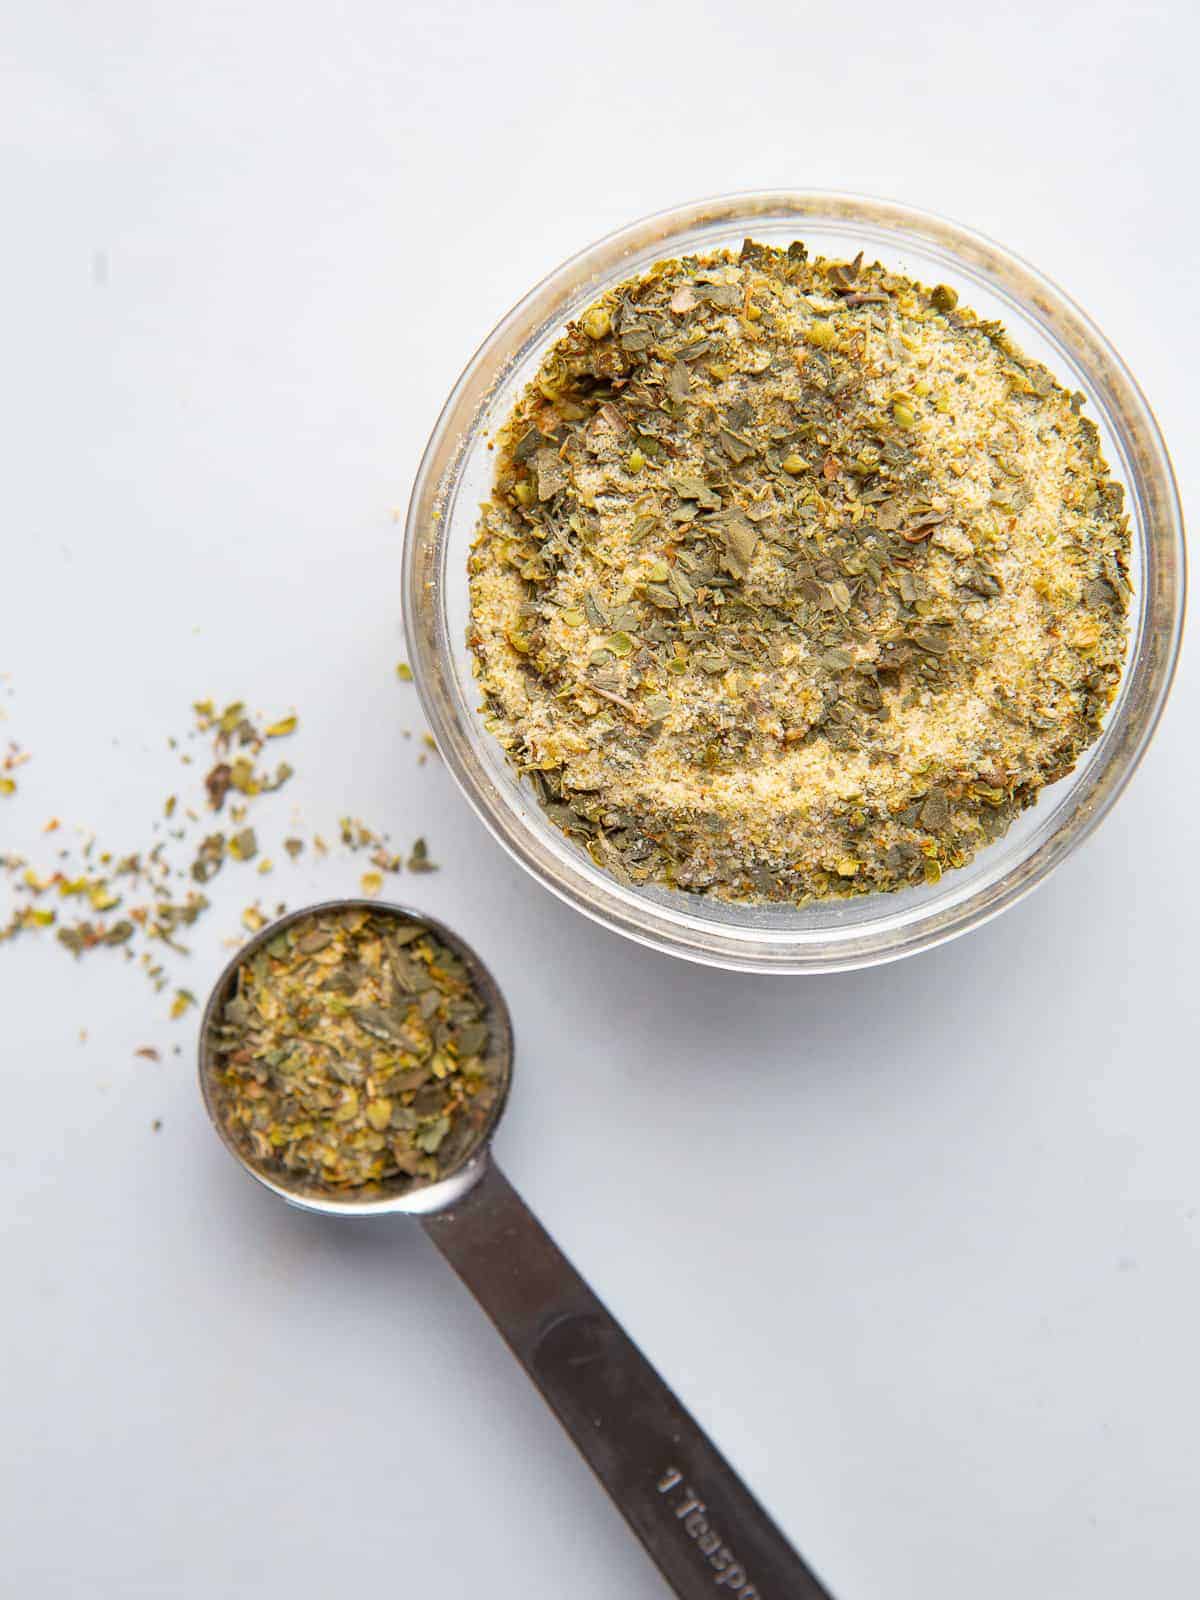 https://cookfasteatwell.com/wp-content/uploads/2021/10/Homemade-Garlic-and-Herb-Seasoning-Recipe.jpg